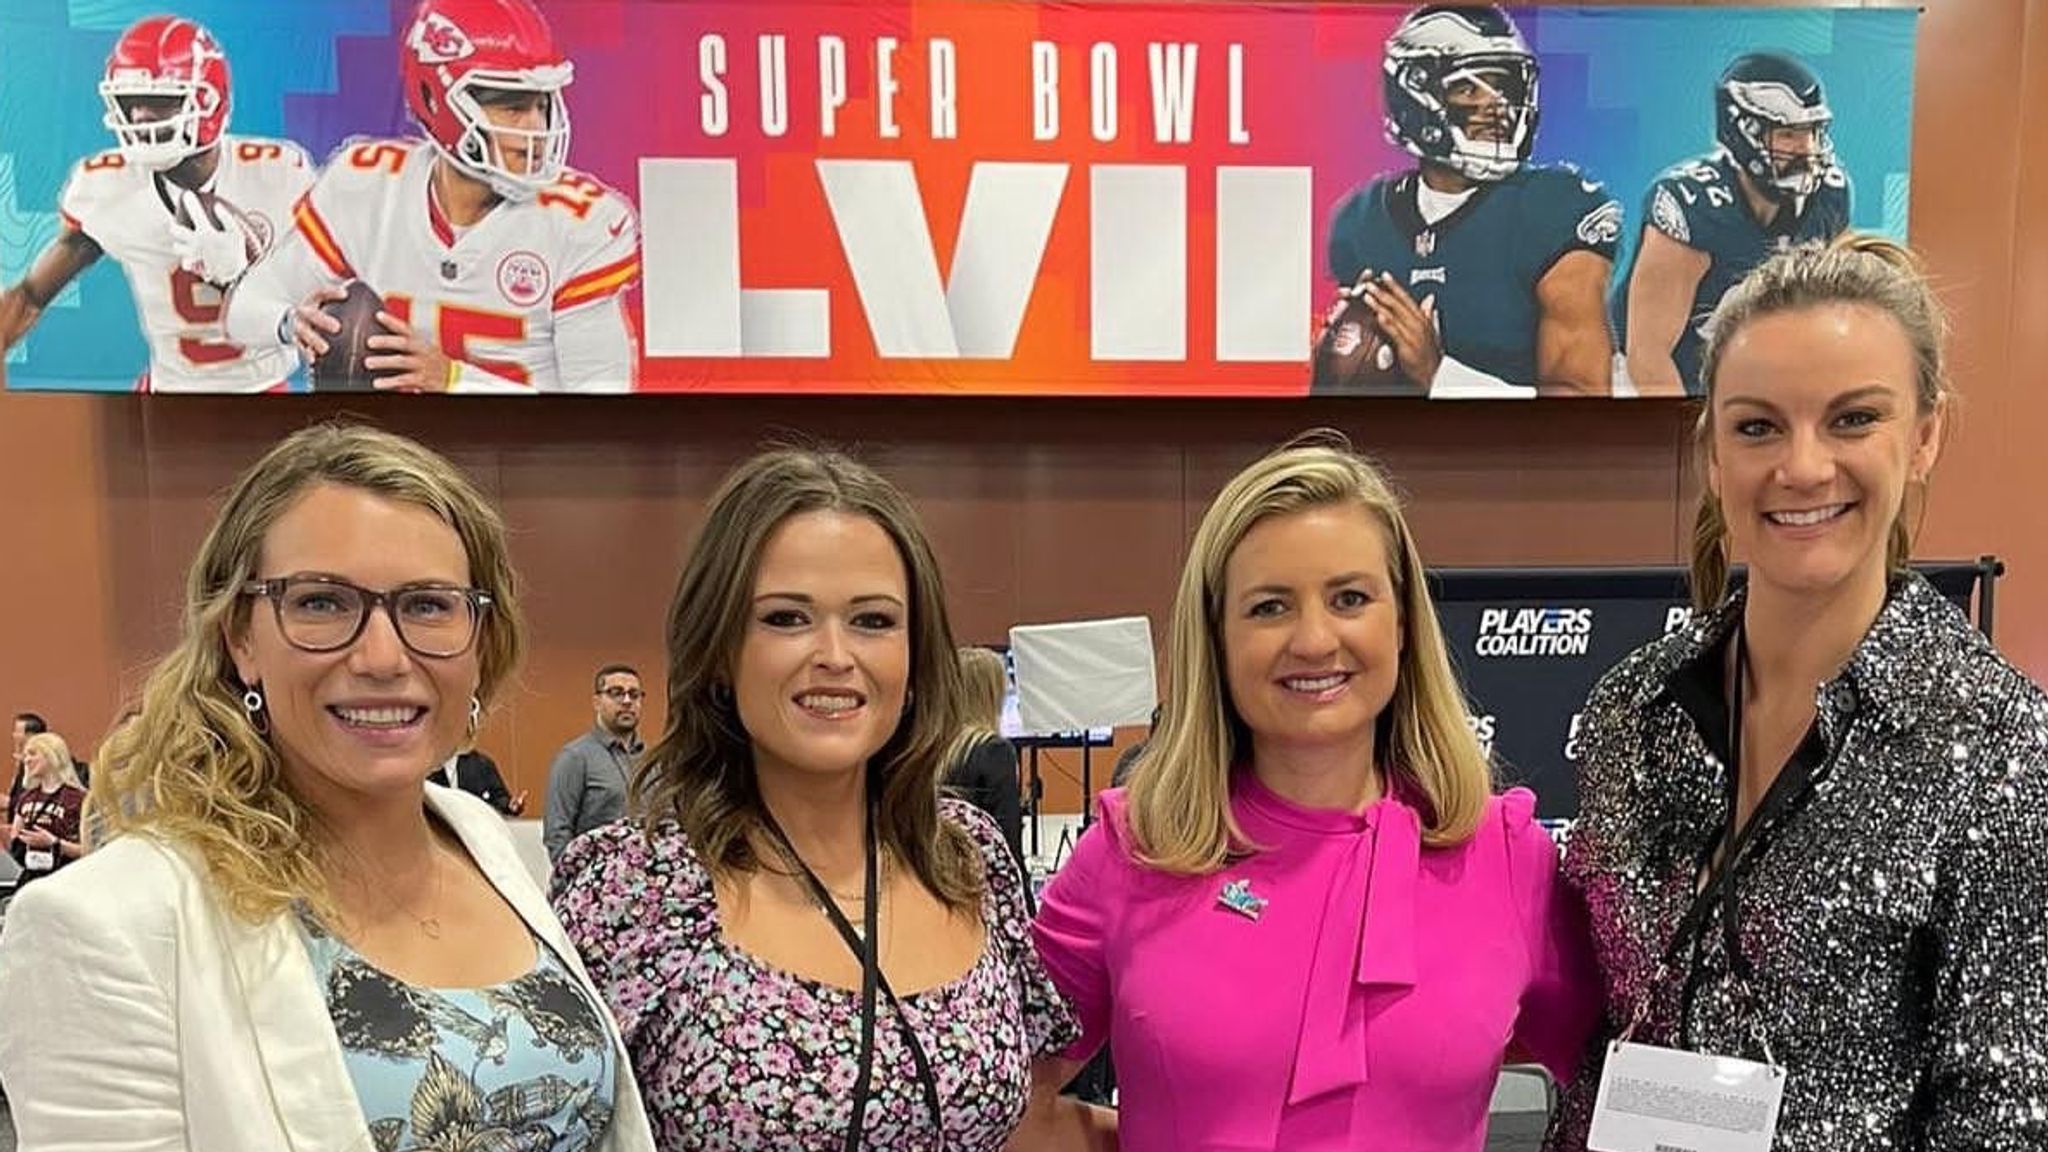 Win a Trip to Super Bowl LVII - America's Credit Union